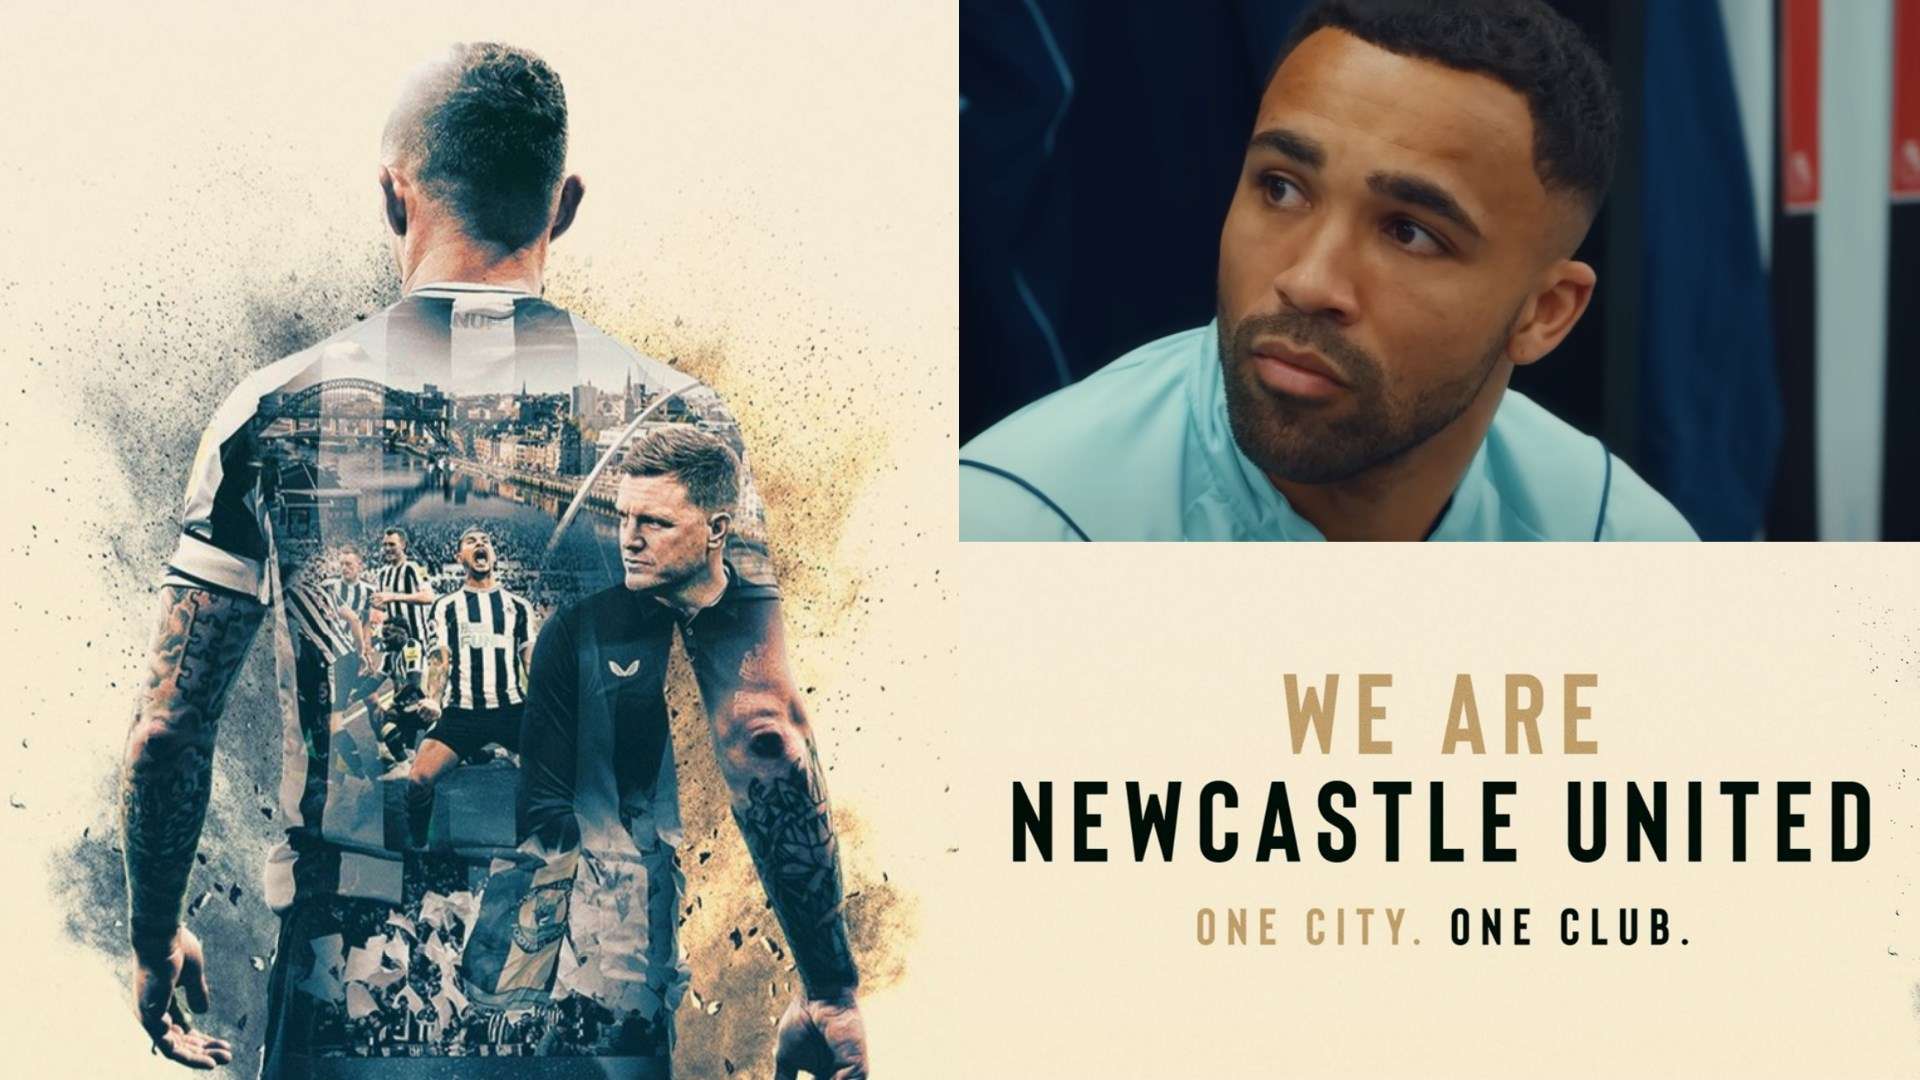 We Are Newcastle United Amazon Prime Video documentary